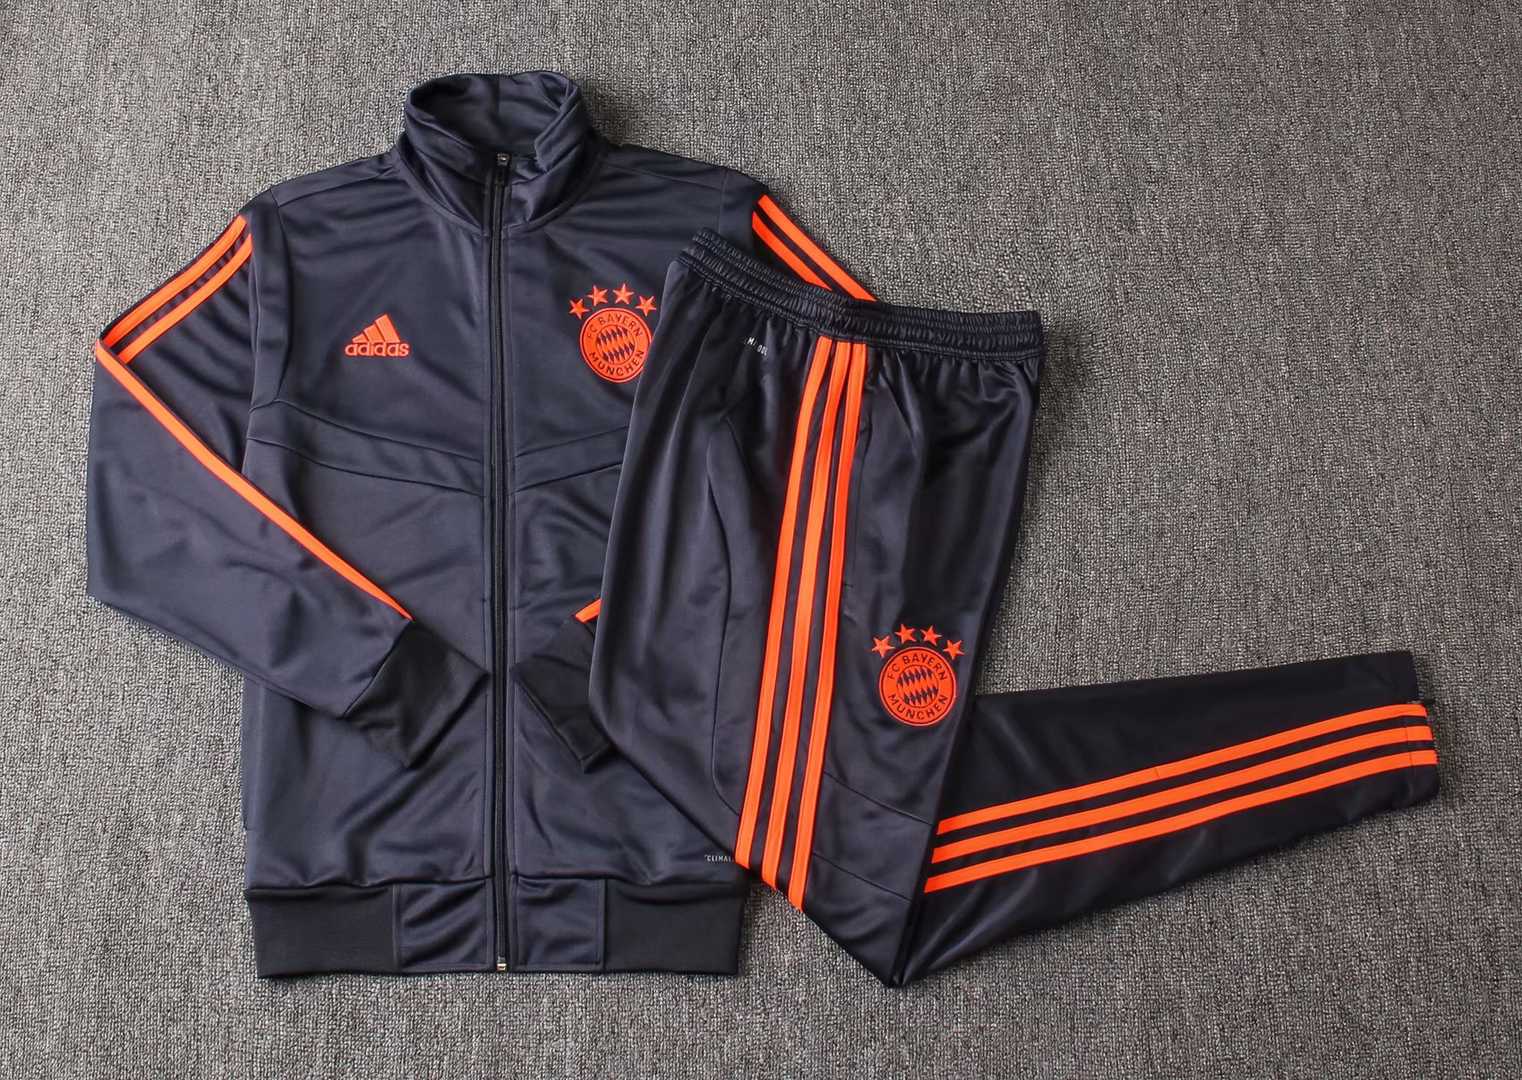 2019/20 Bayern Munich High Neck Blue Mens Soccer Training Suit(Jacket + Pants)